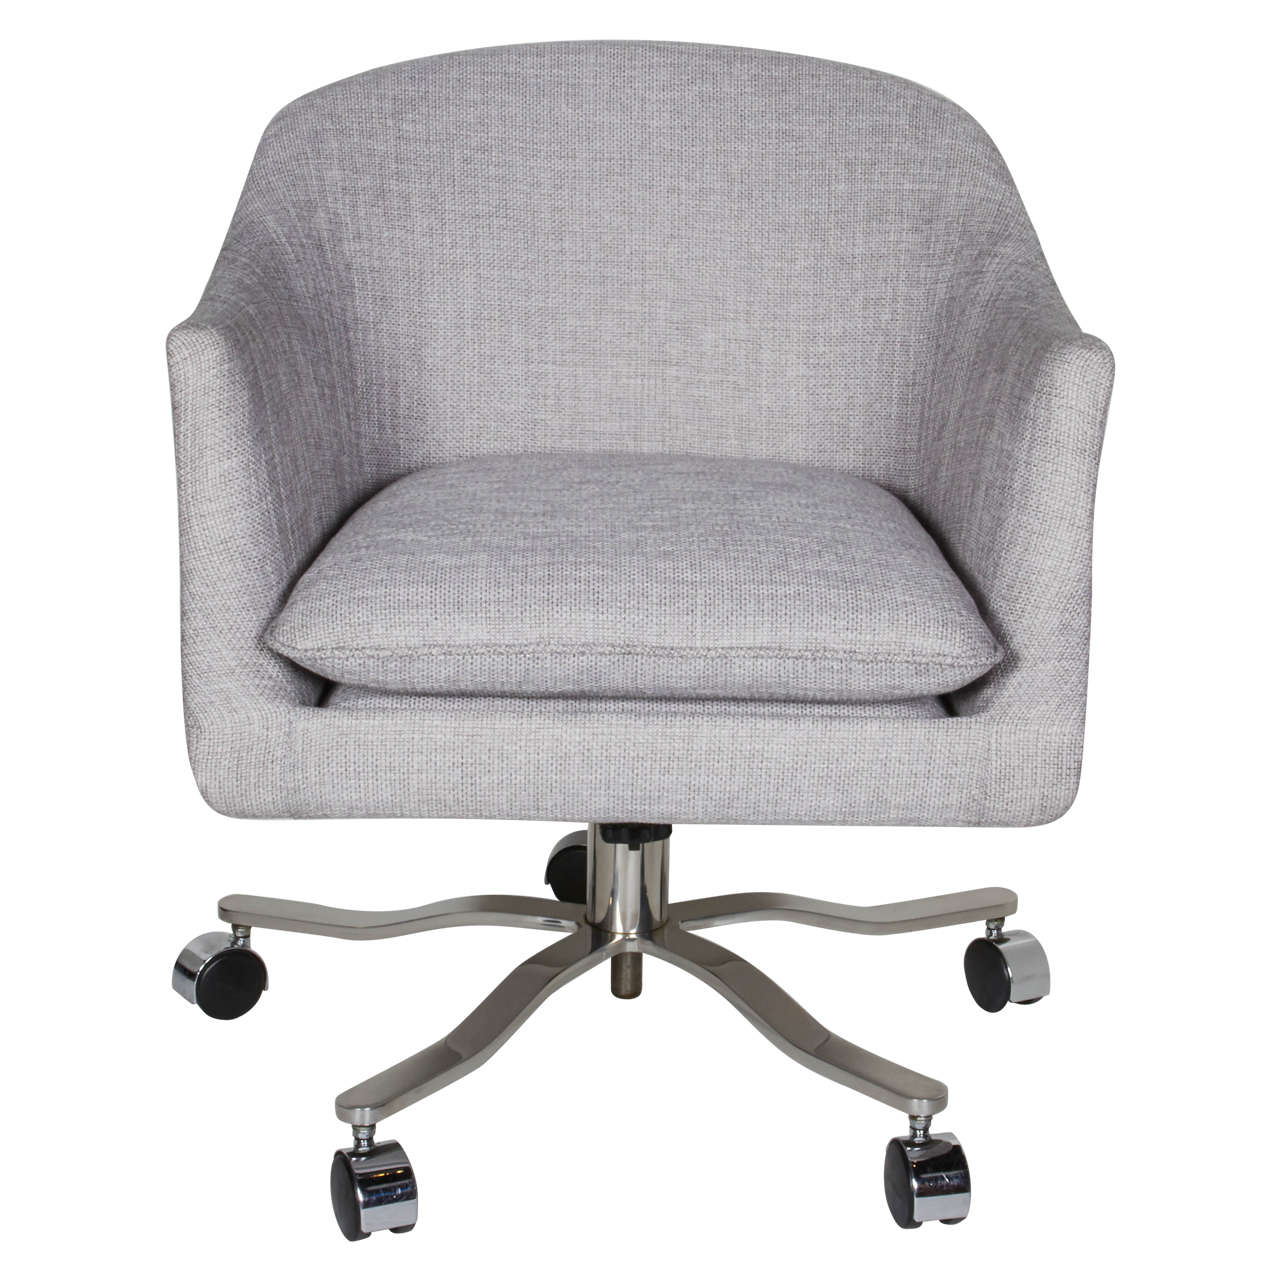 Mid-Century Modern Swivel Desk Chair Designed by Ward Bennett